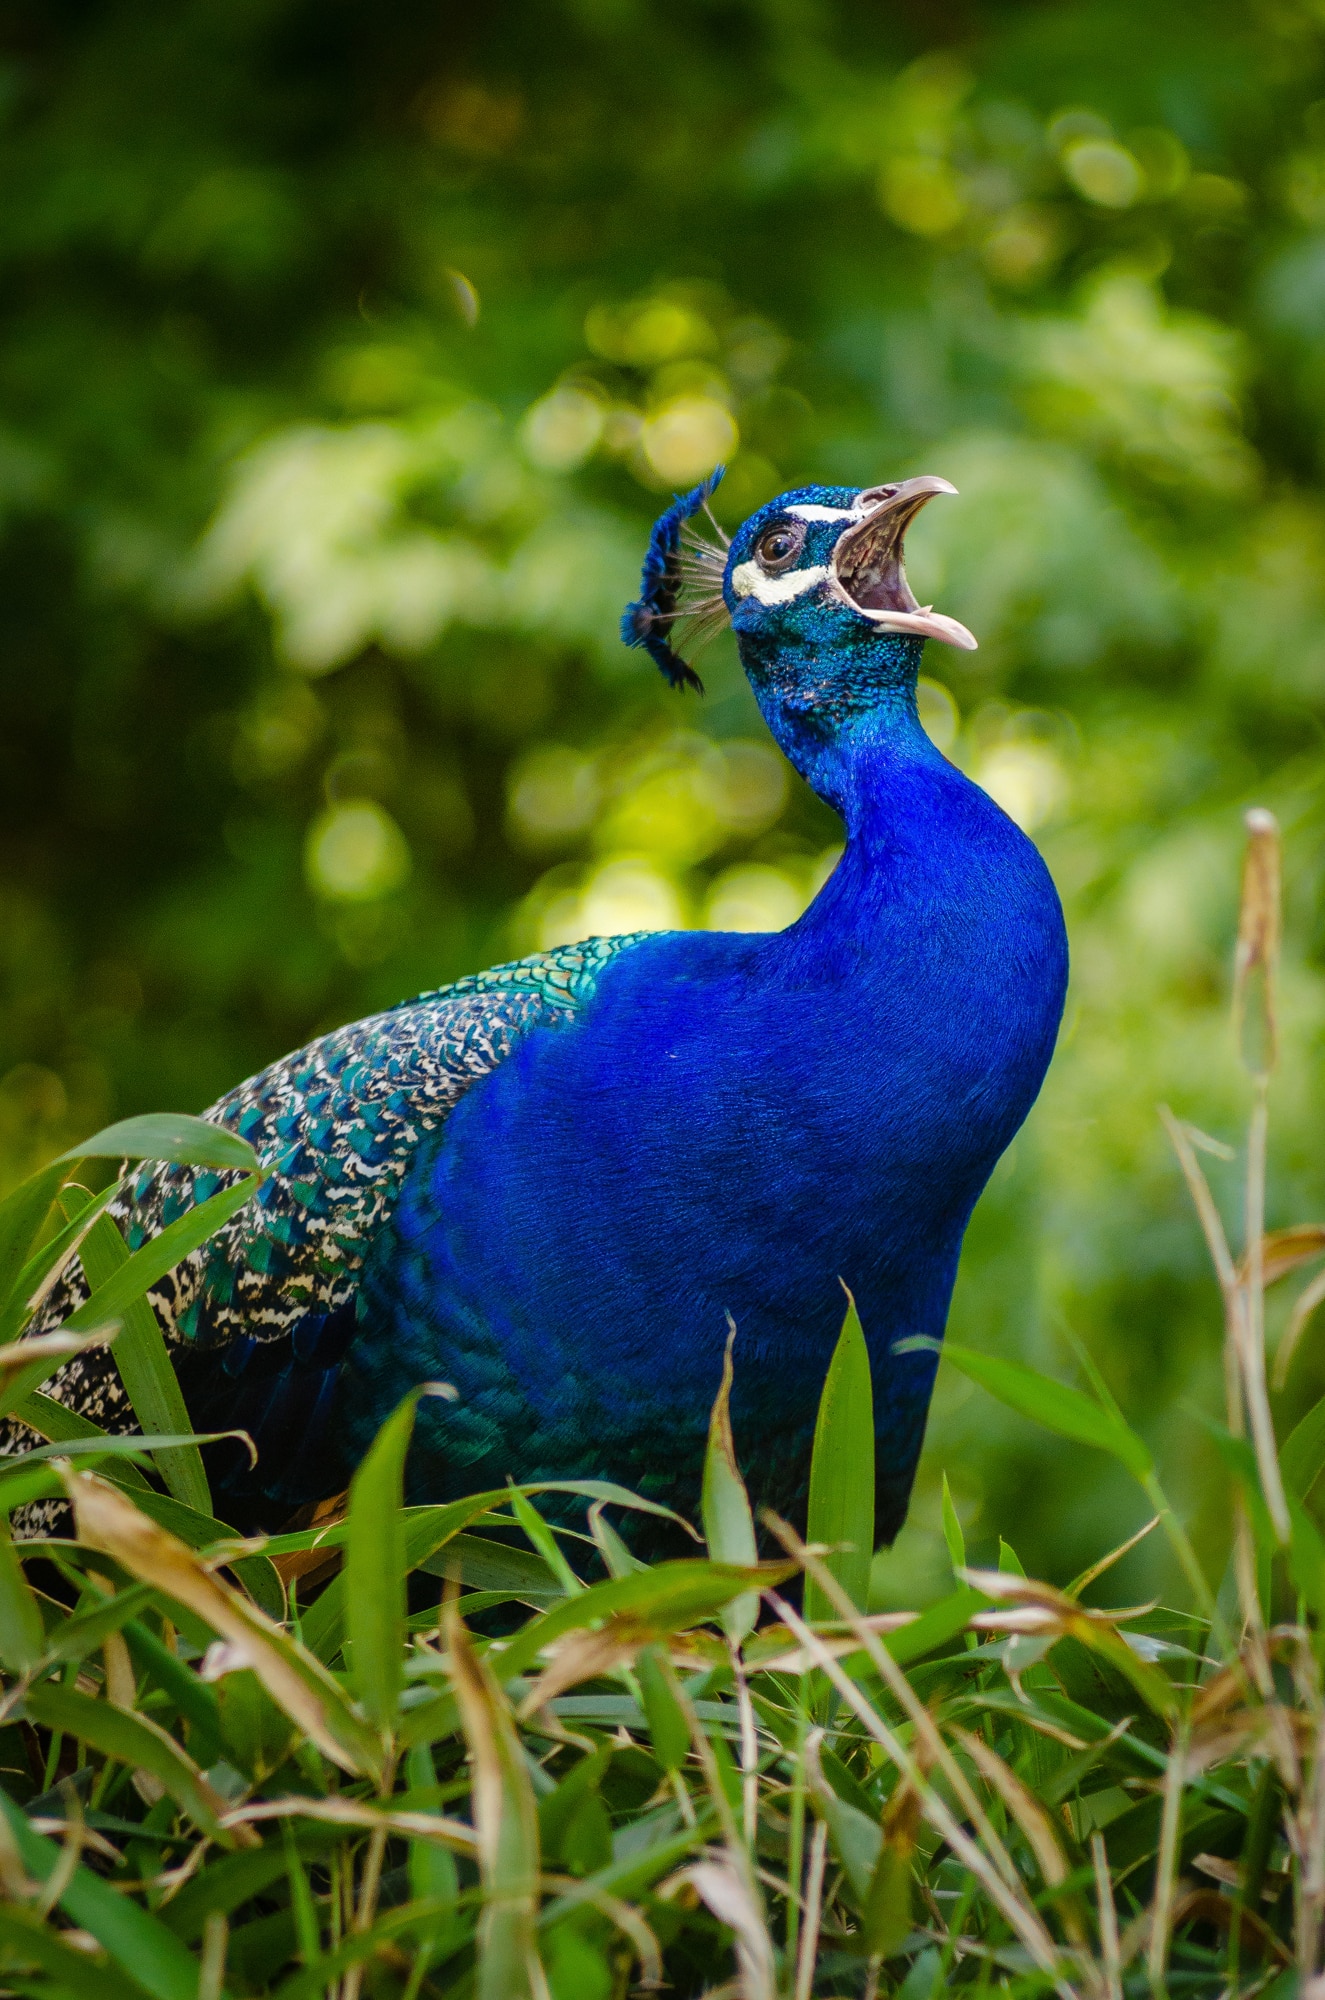 blue peacock on green grass